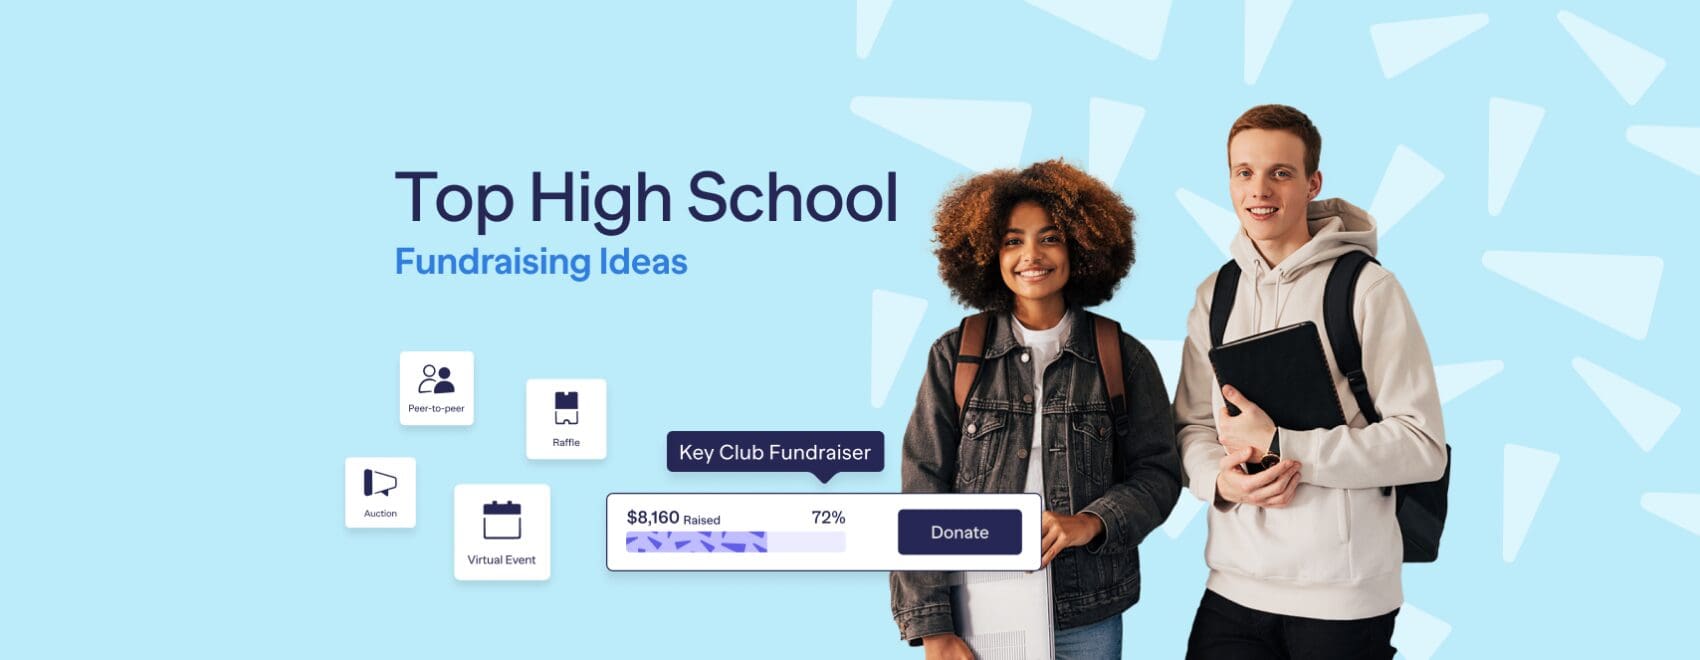 Top high school fundraising ideas